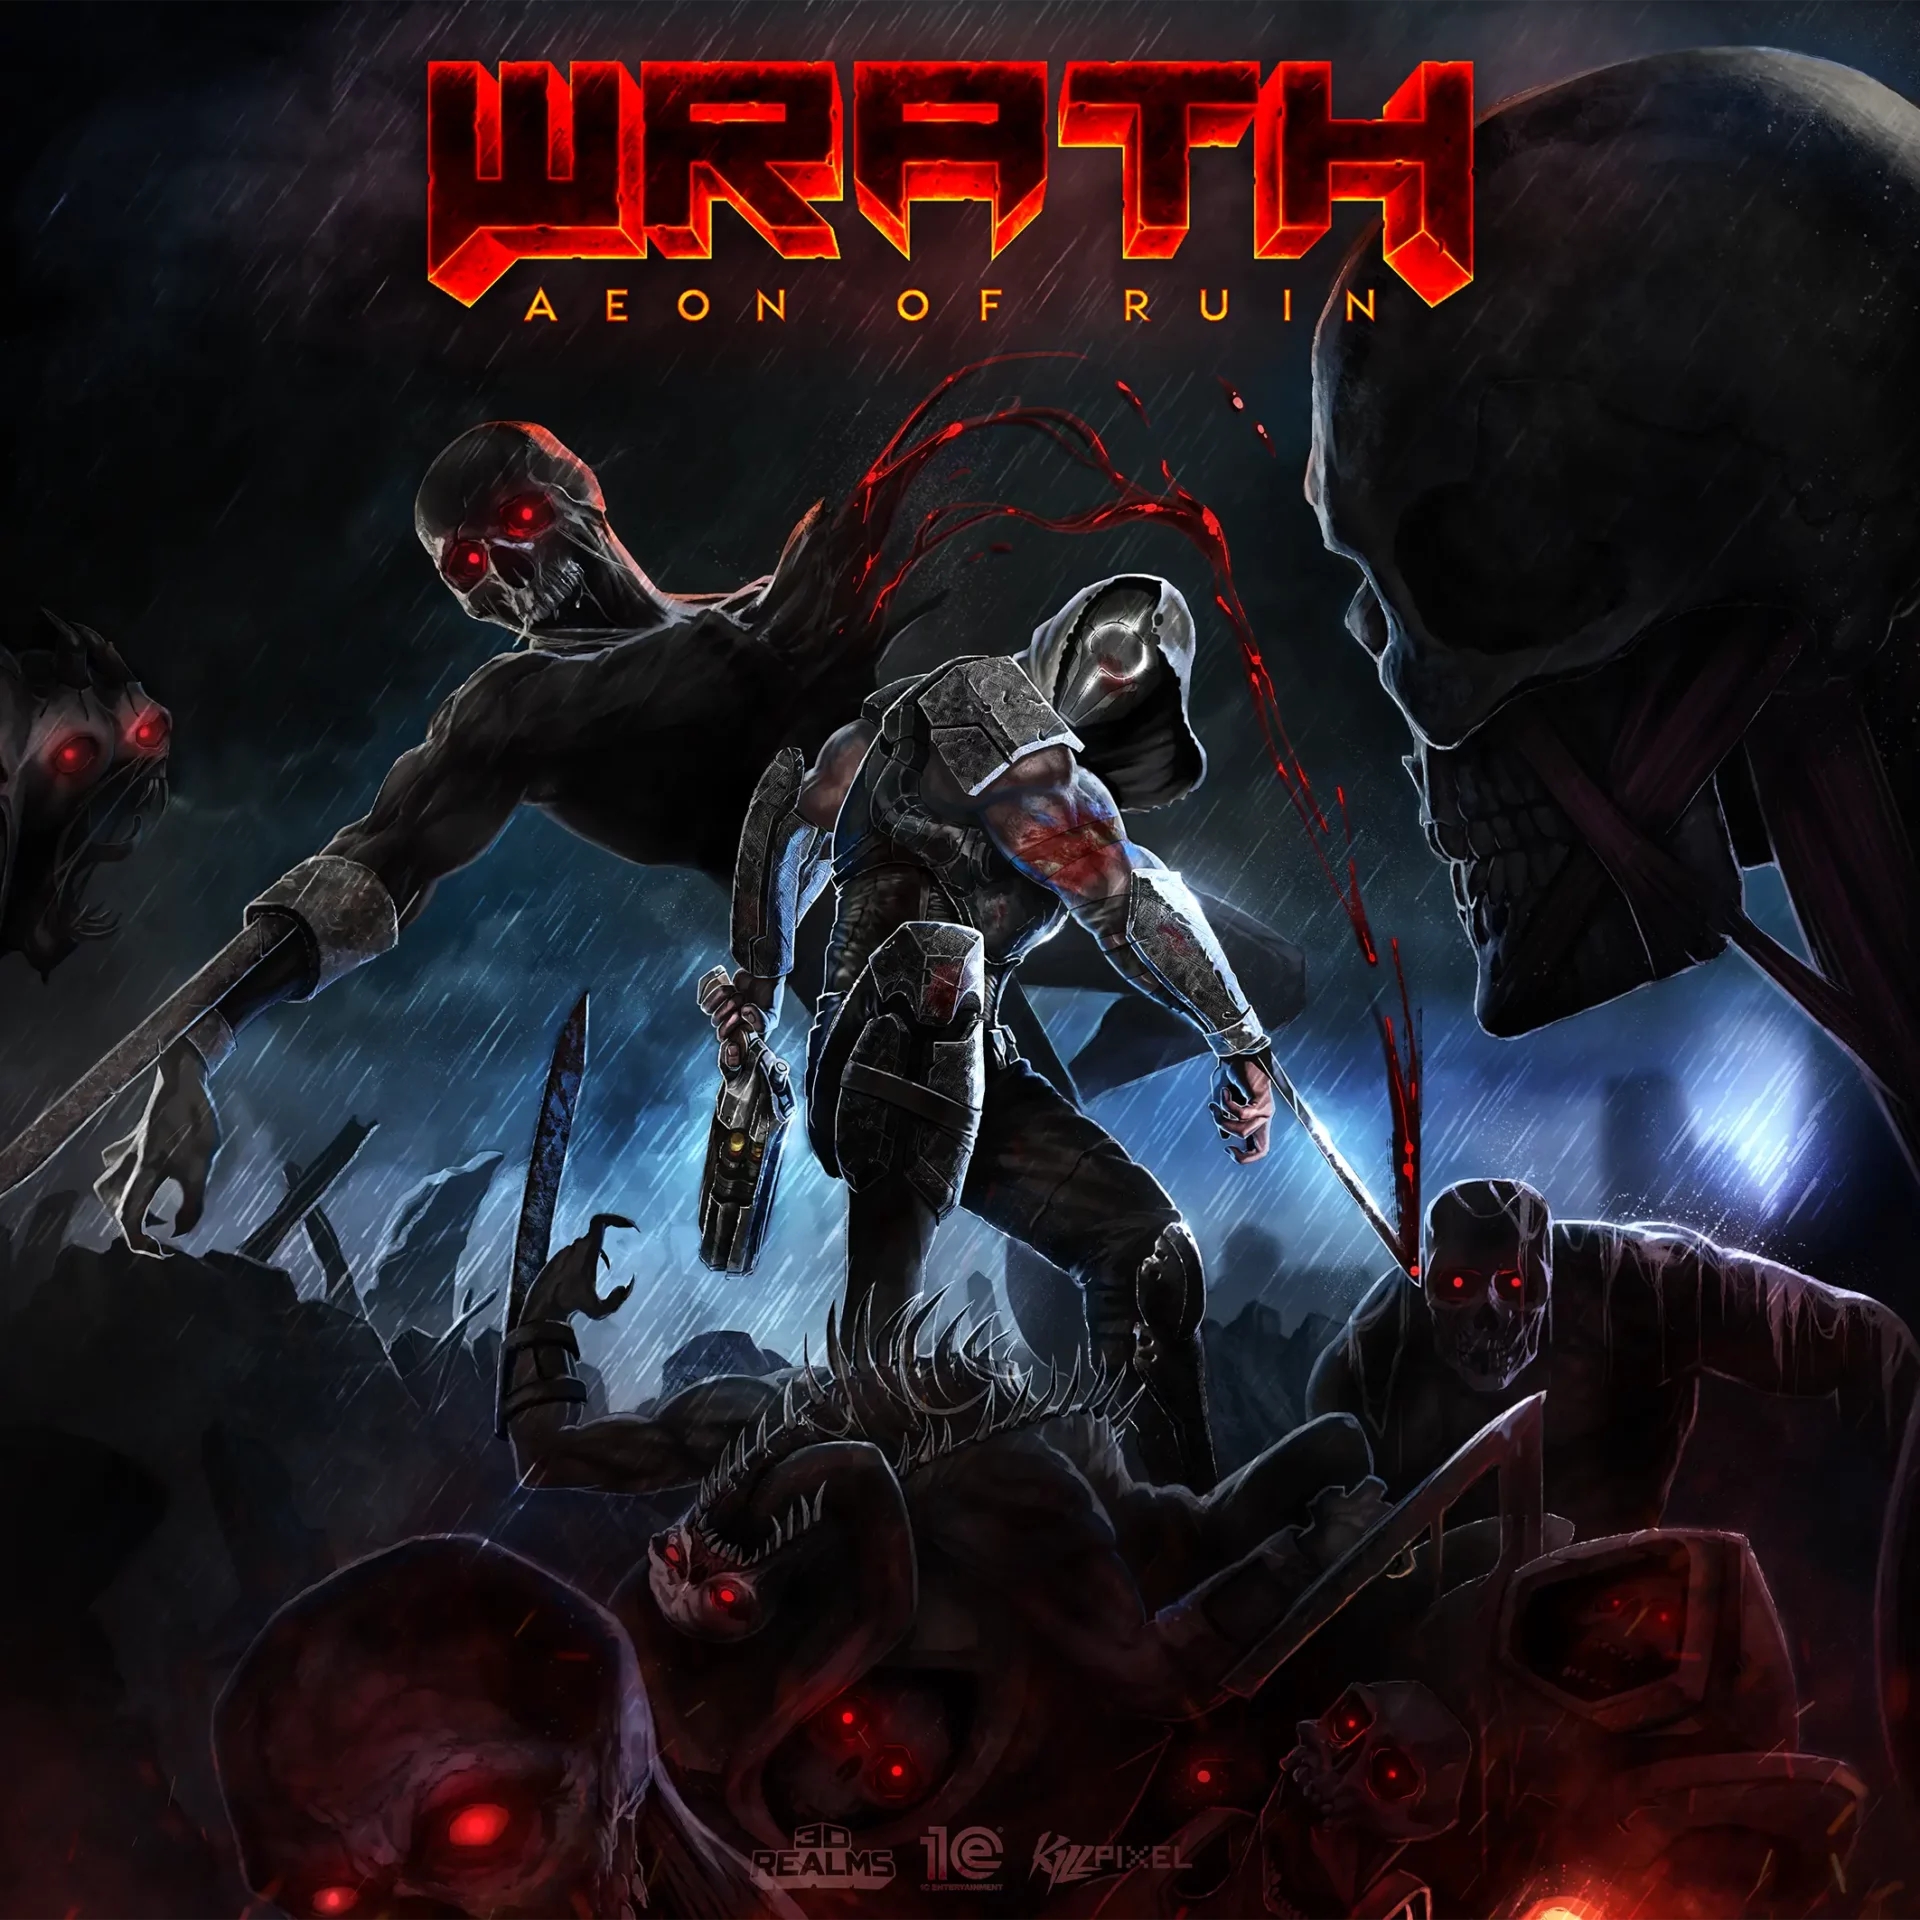 wrath: aeon of ruin